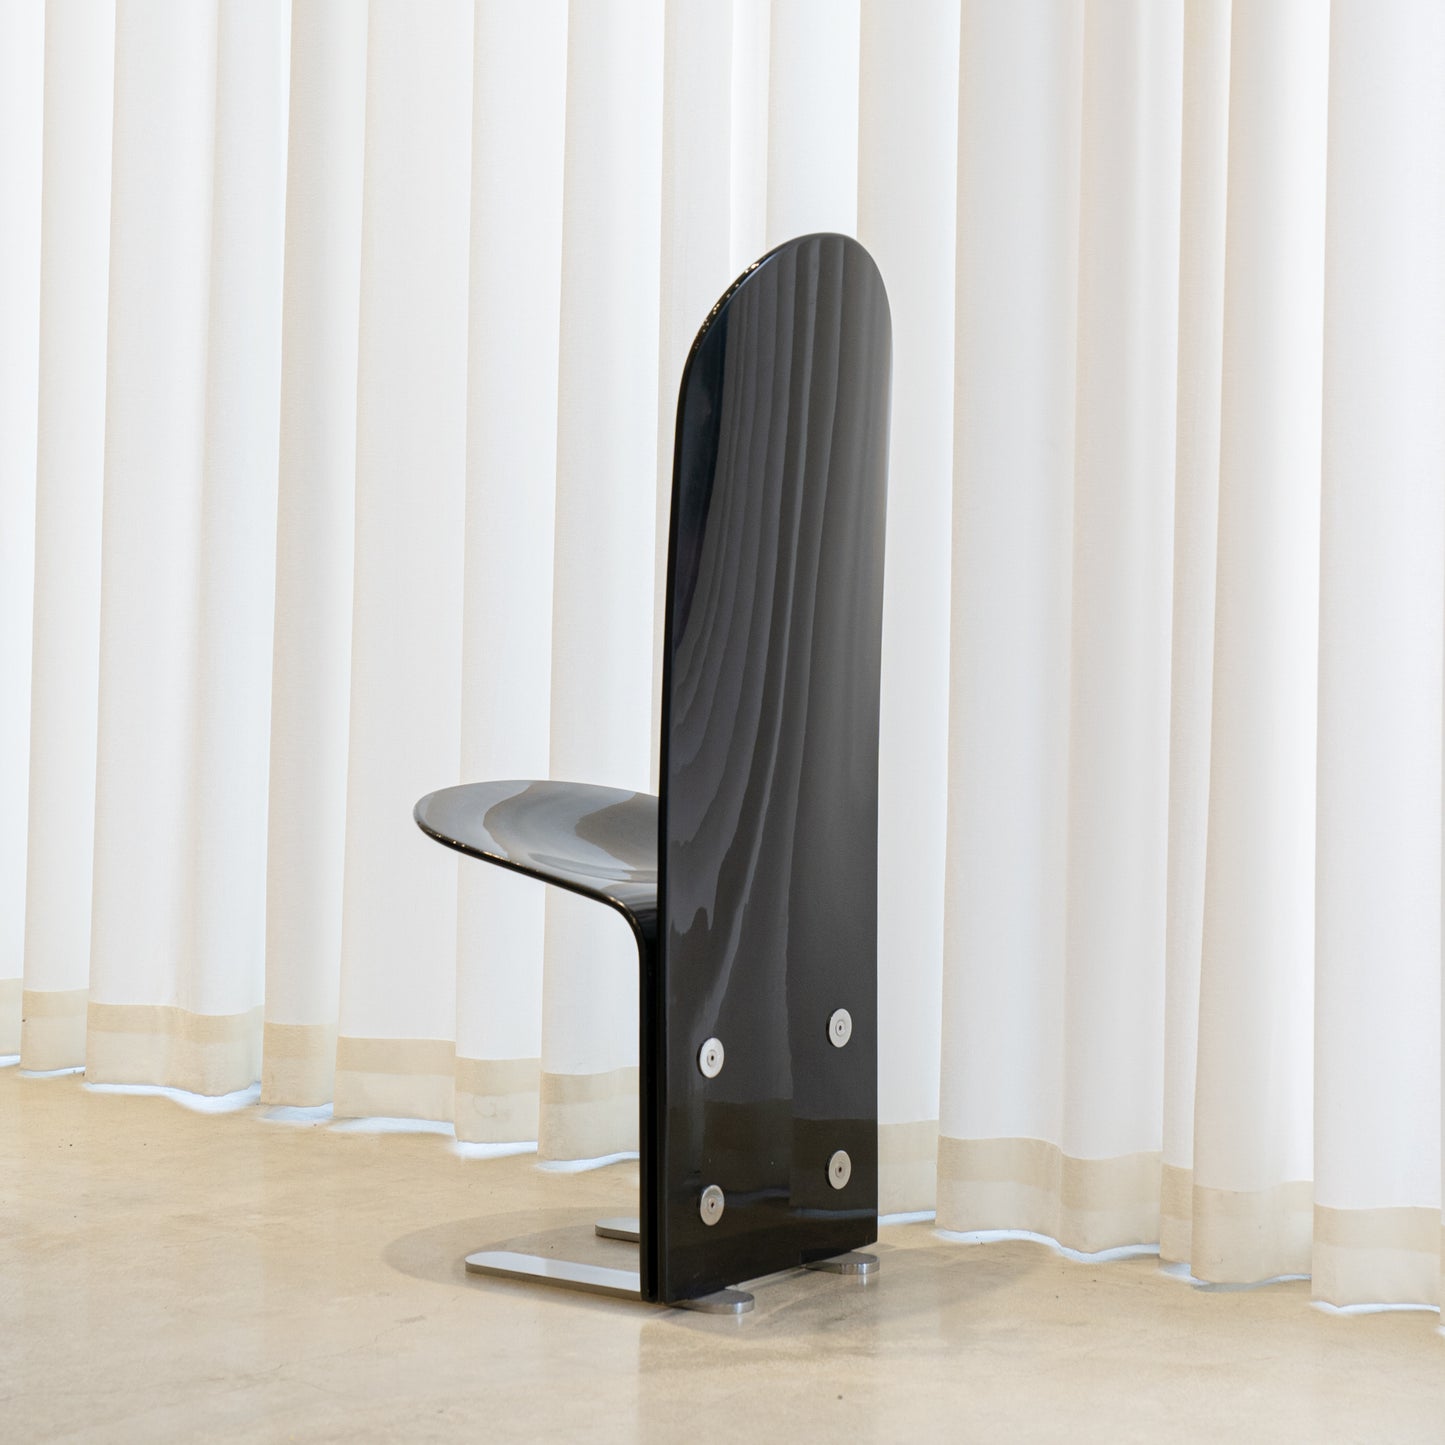 Pelicano Chair by Luigi Saccardo